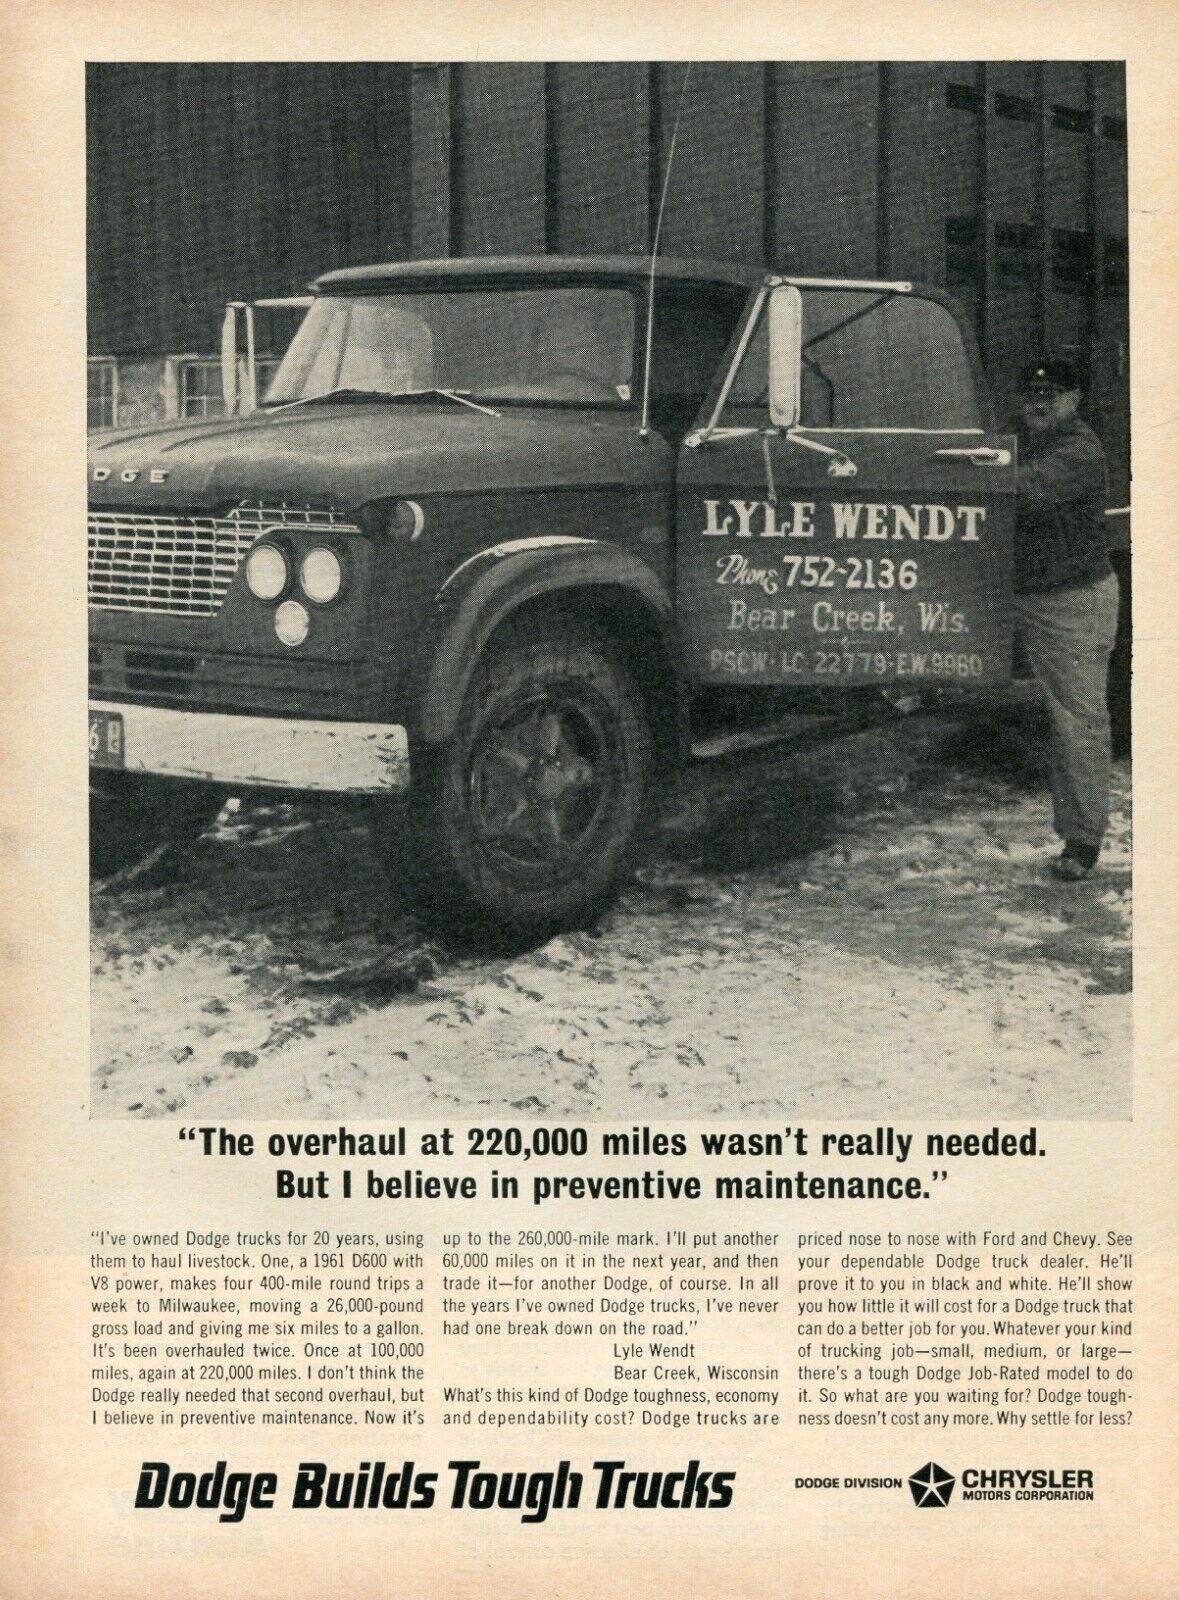 1966 Print Ad Chrysler Dodge Farm Truck 1961 D600 Lyle Wendt Bear Creek WI